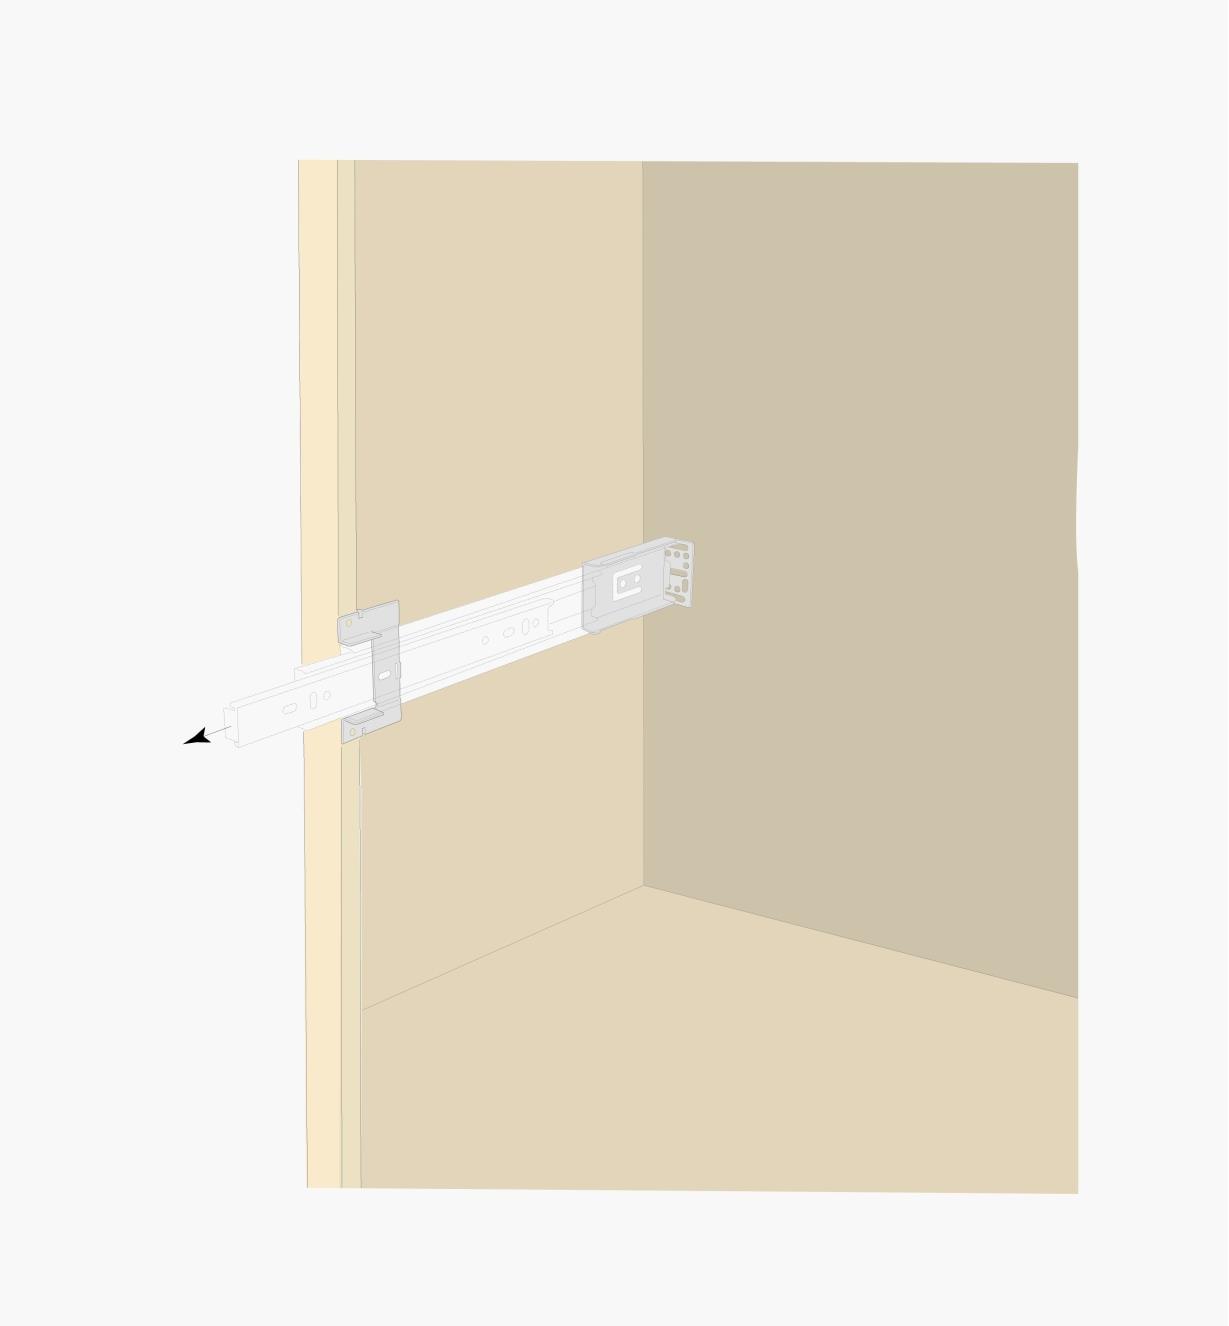 Illustration showing face-frame brackets guiding a slide on a face-frame cabinet